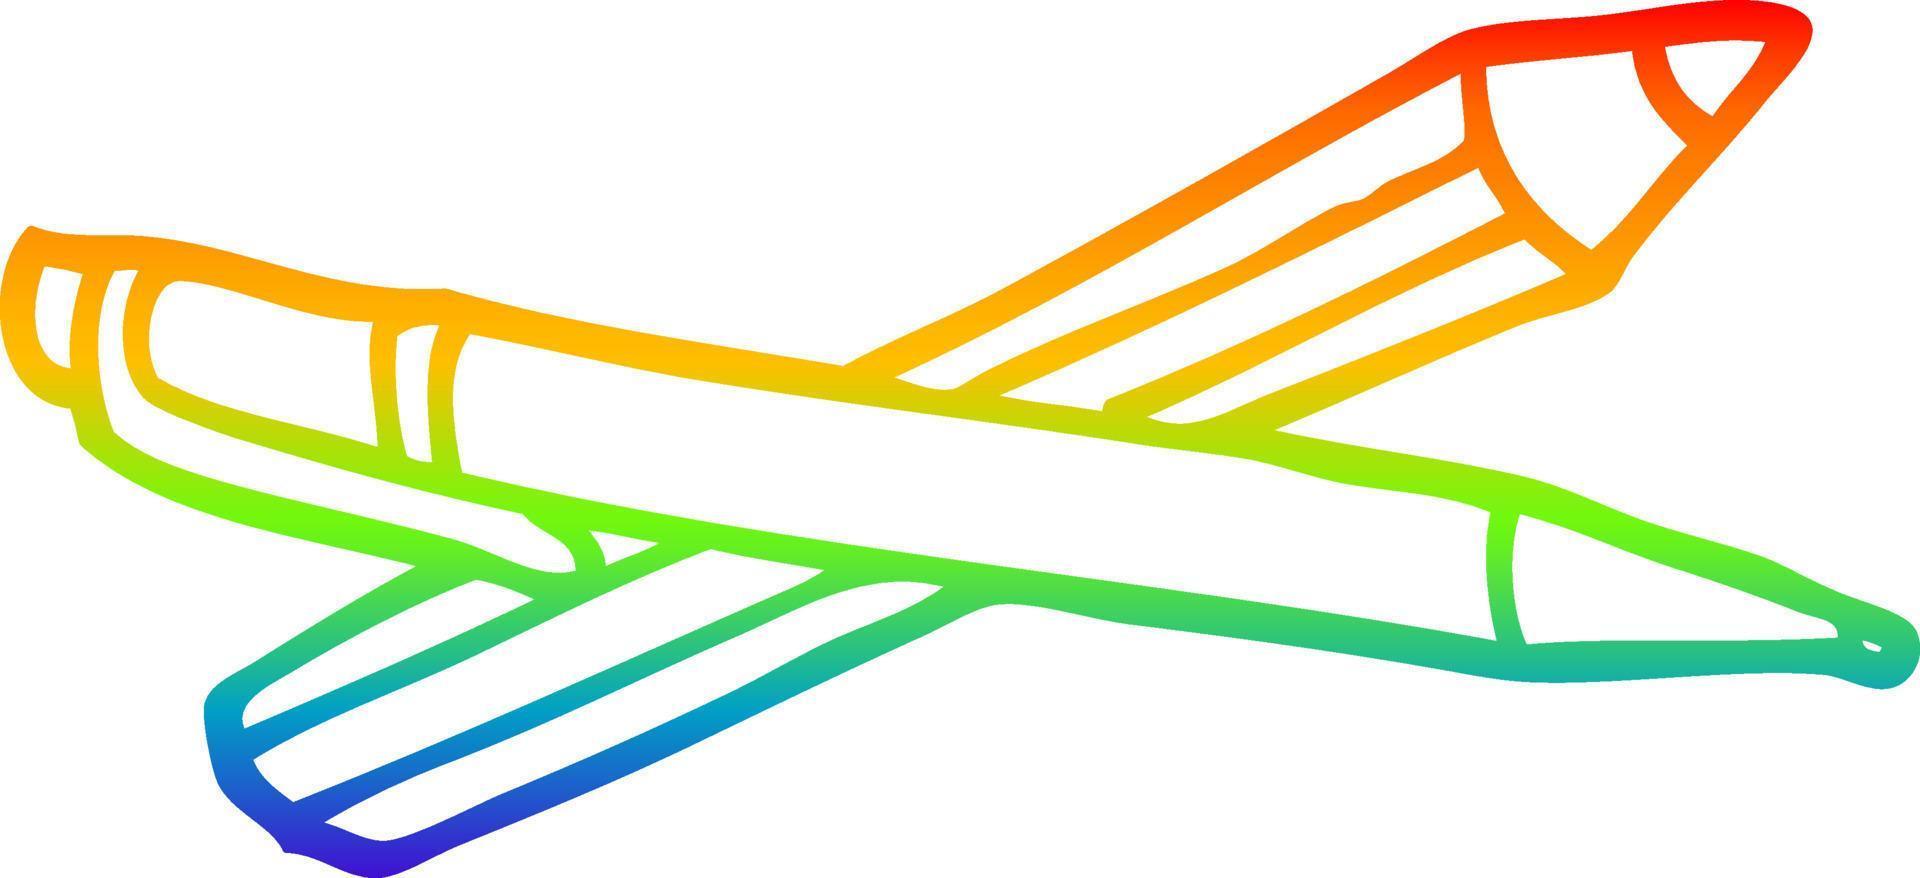 rainbow gradient line drawing cartoon pencil and pen vector